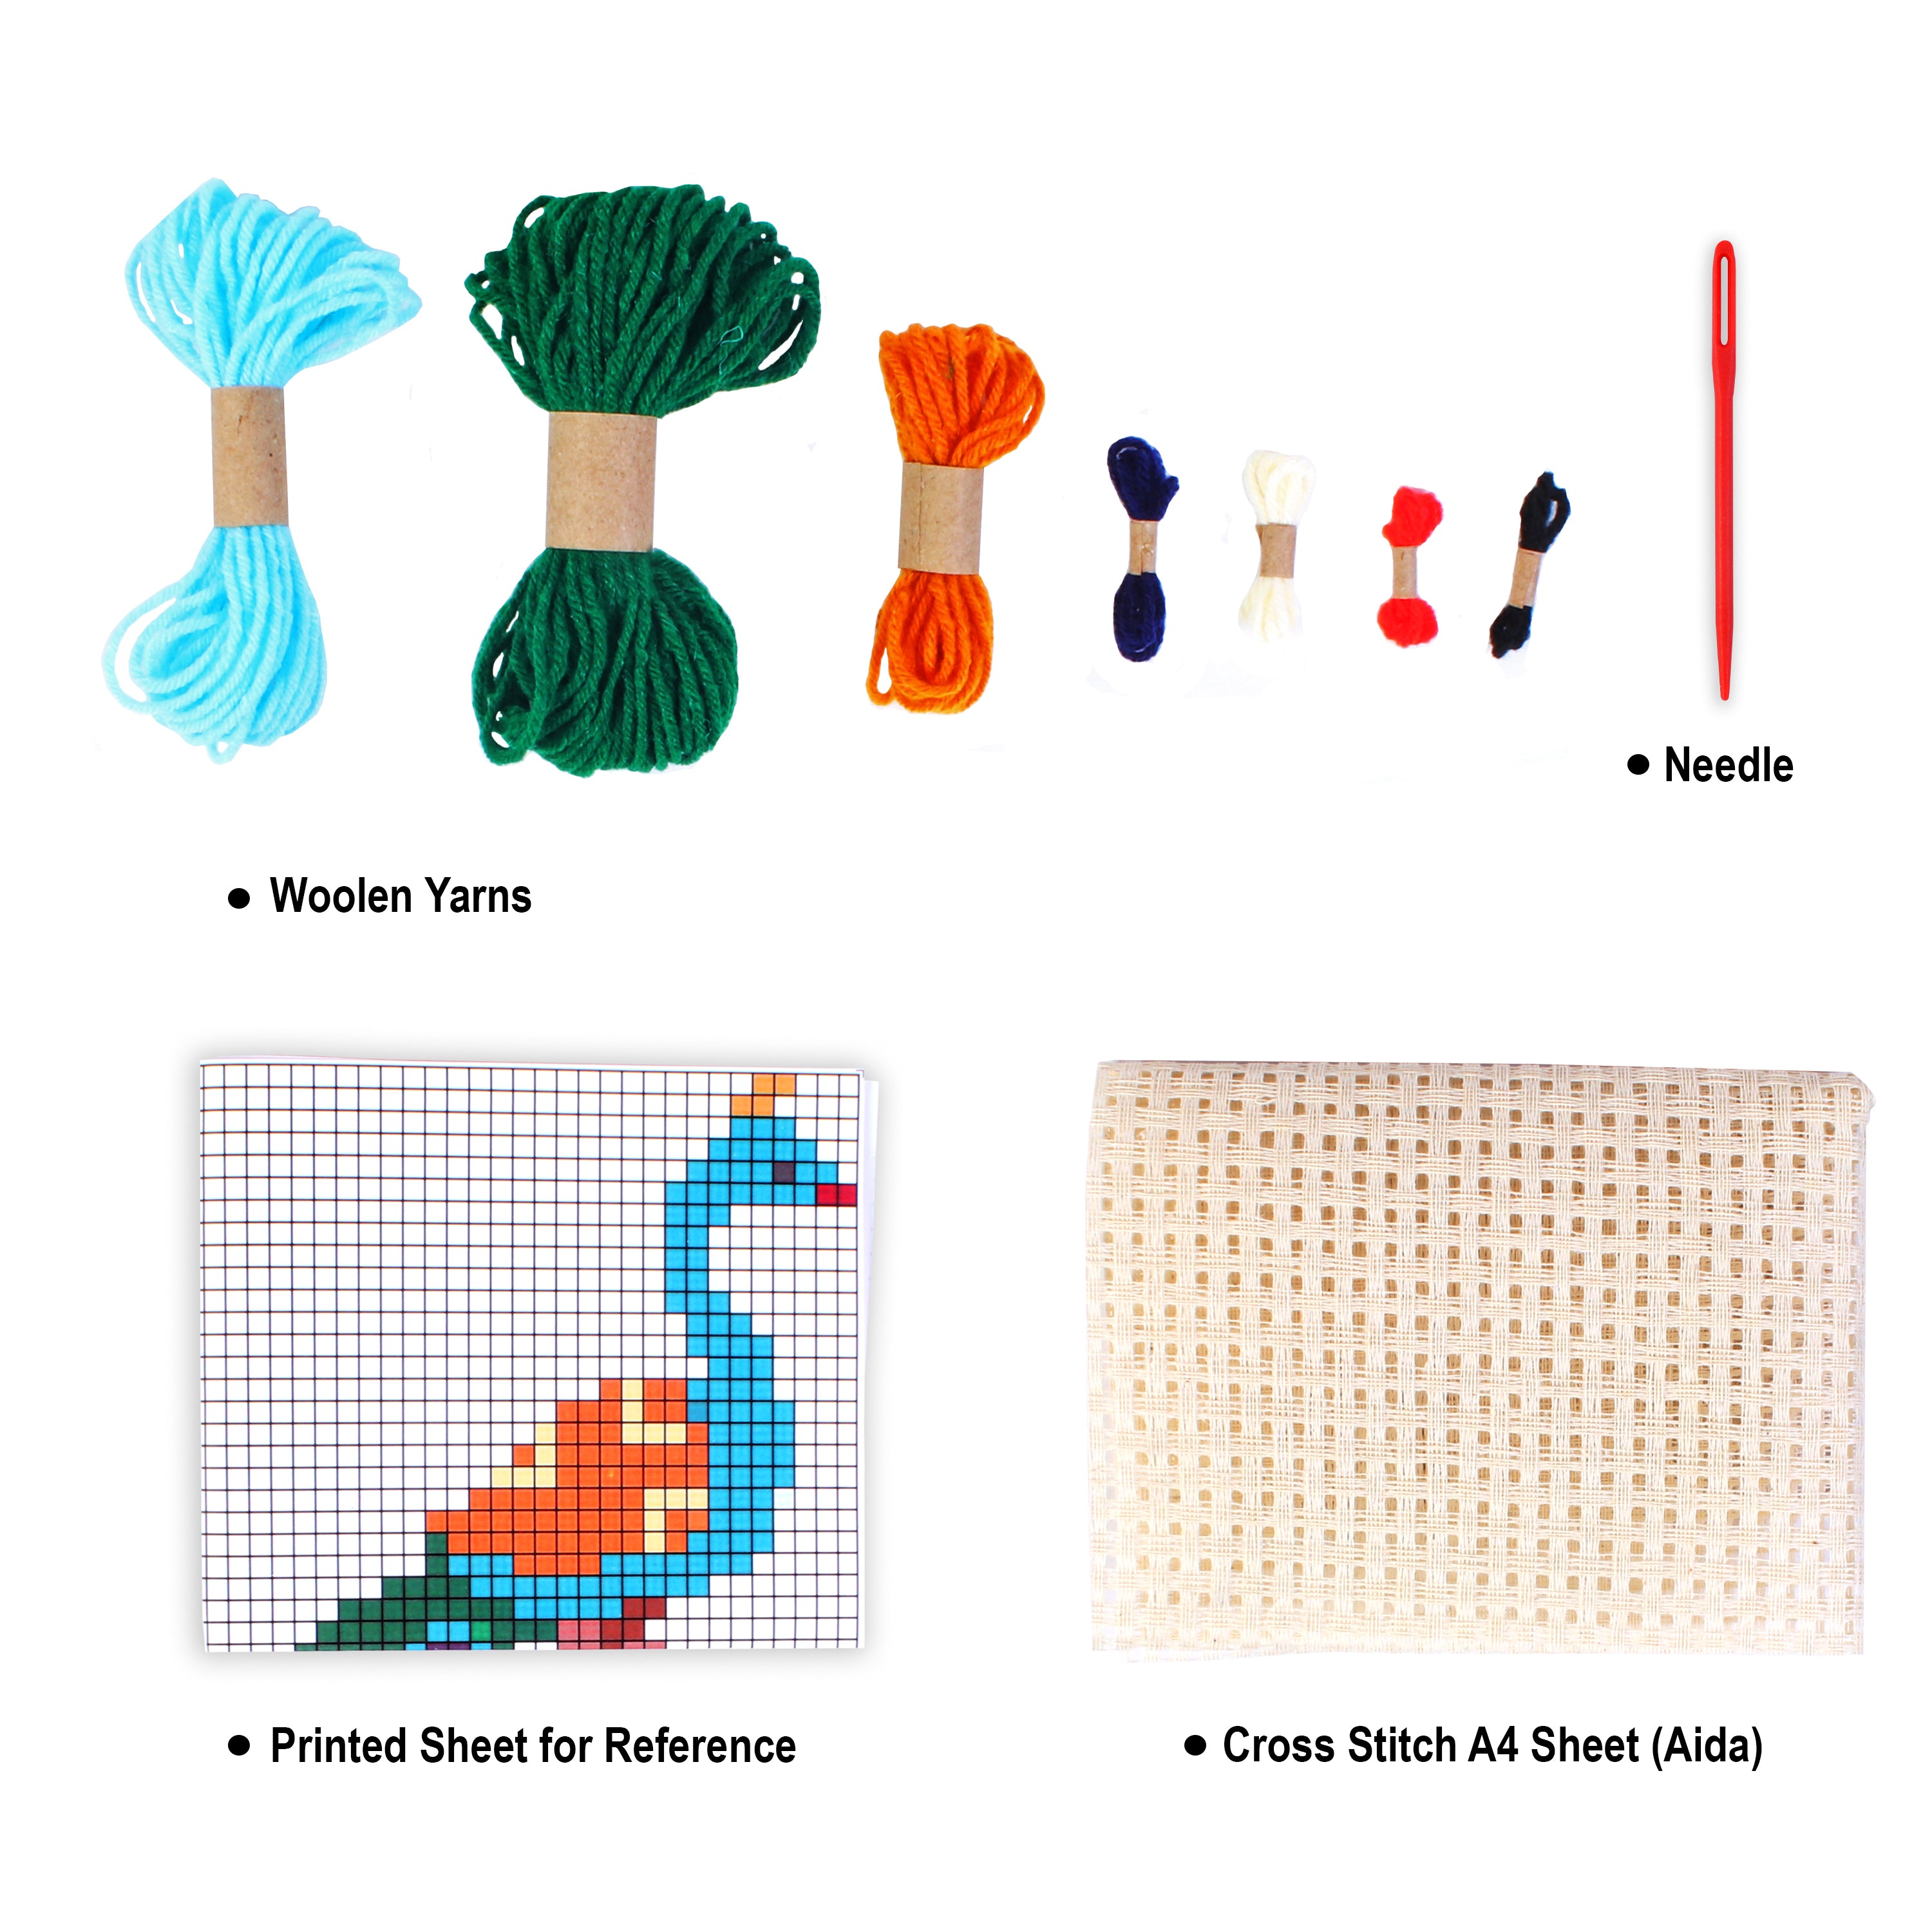 Diy Cross Stitch Peacock Kit 1 Box